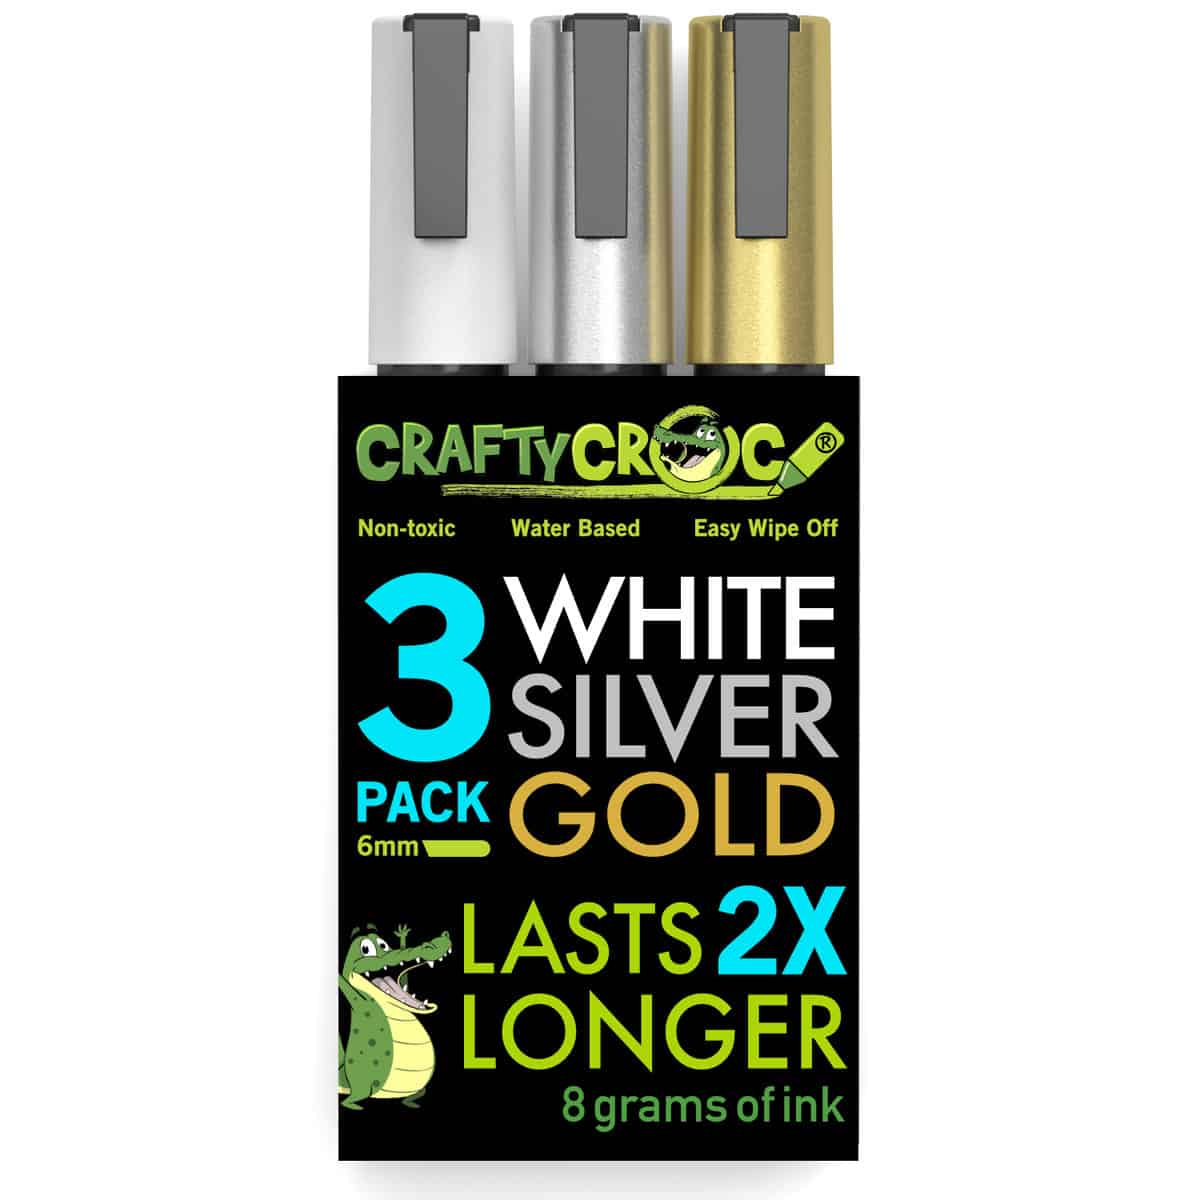  Crafty Croc Metallic Chalk Markers, Gold Silver White